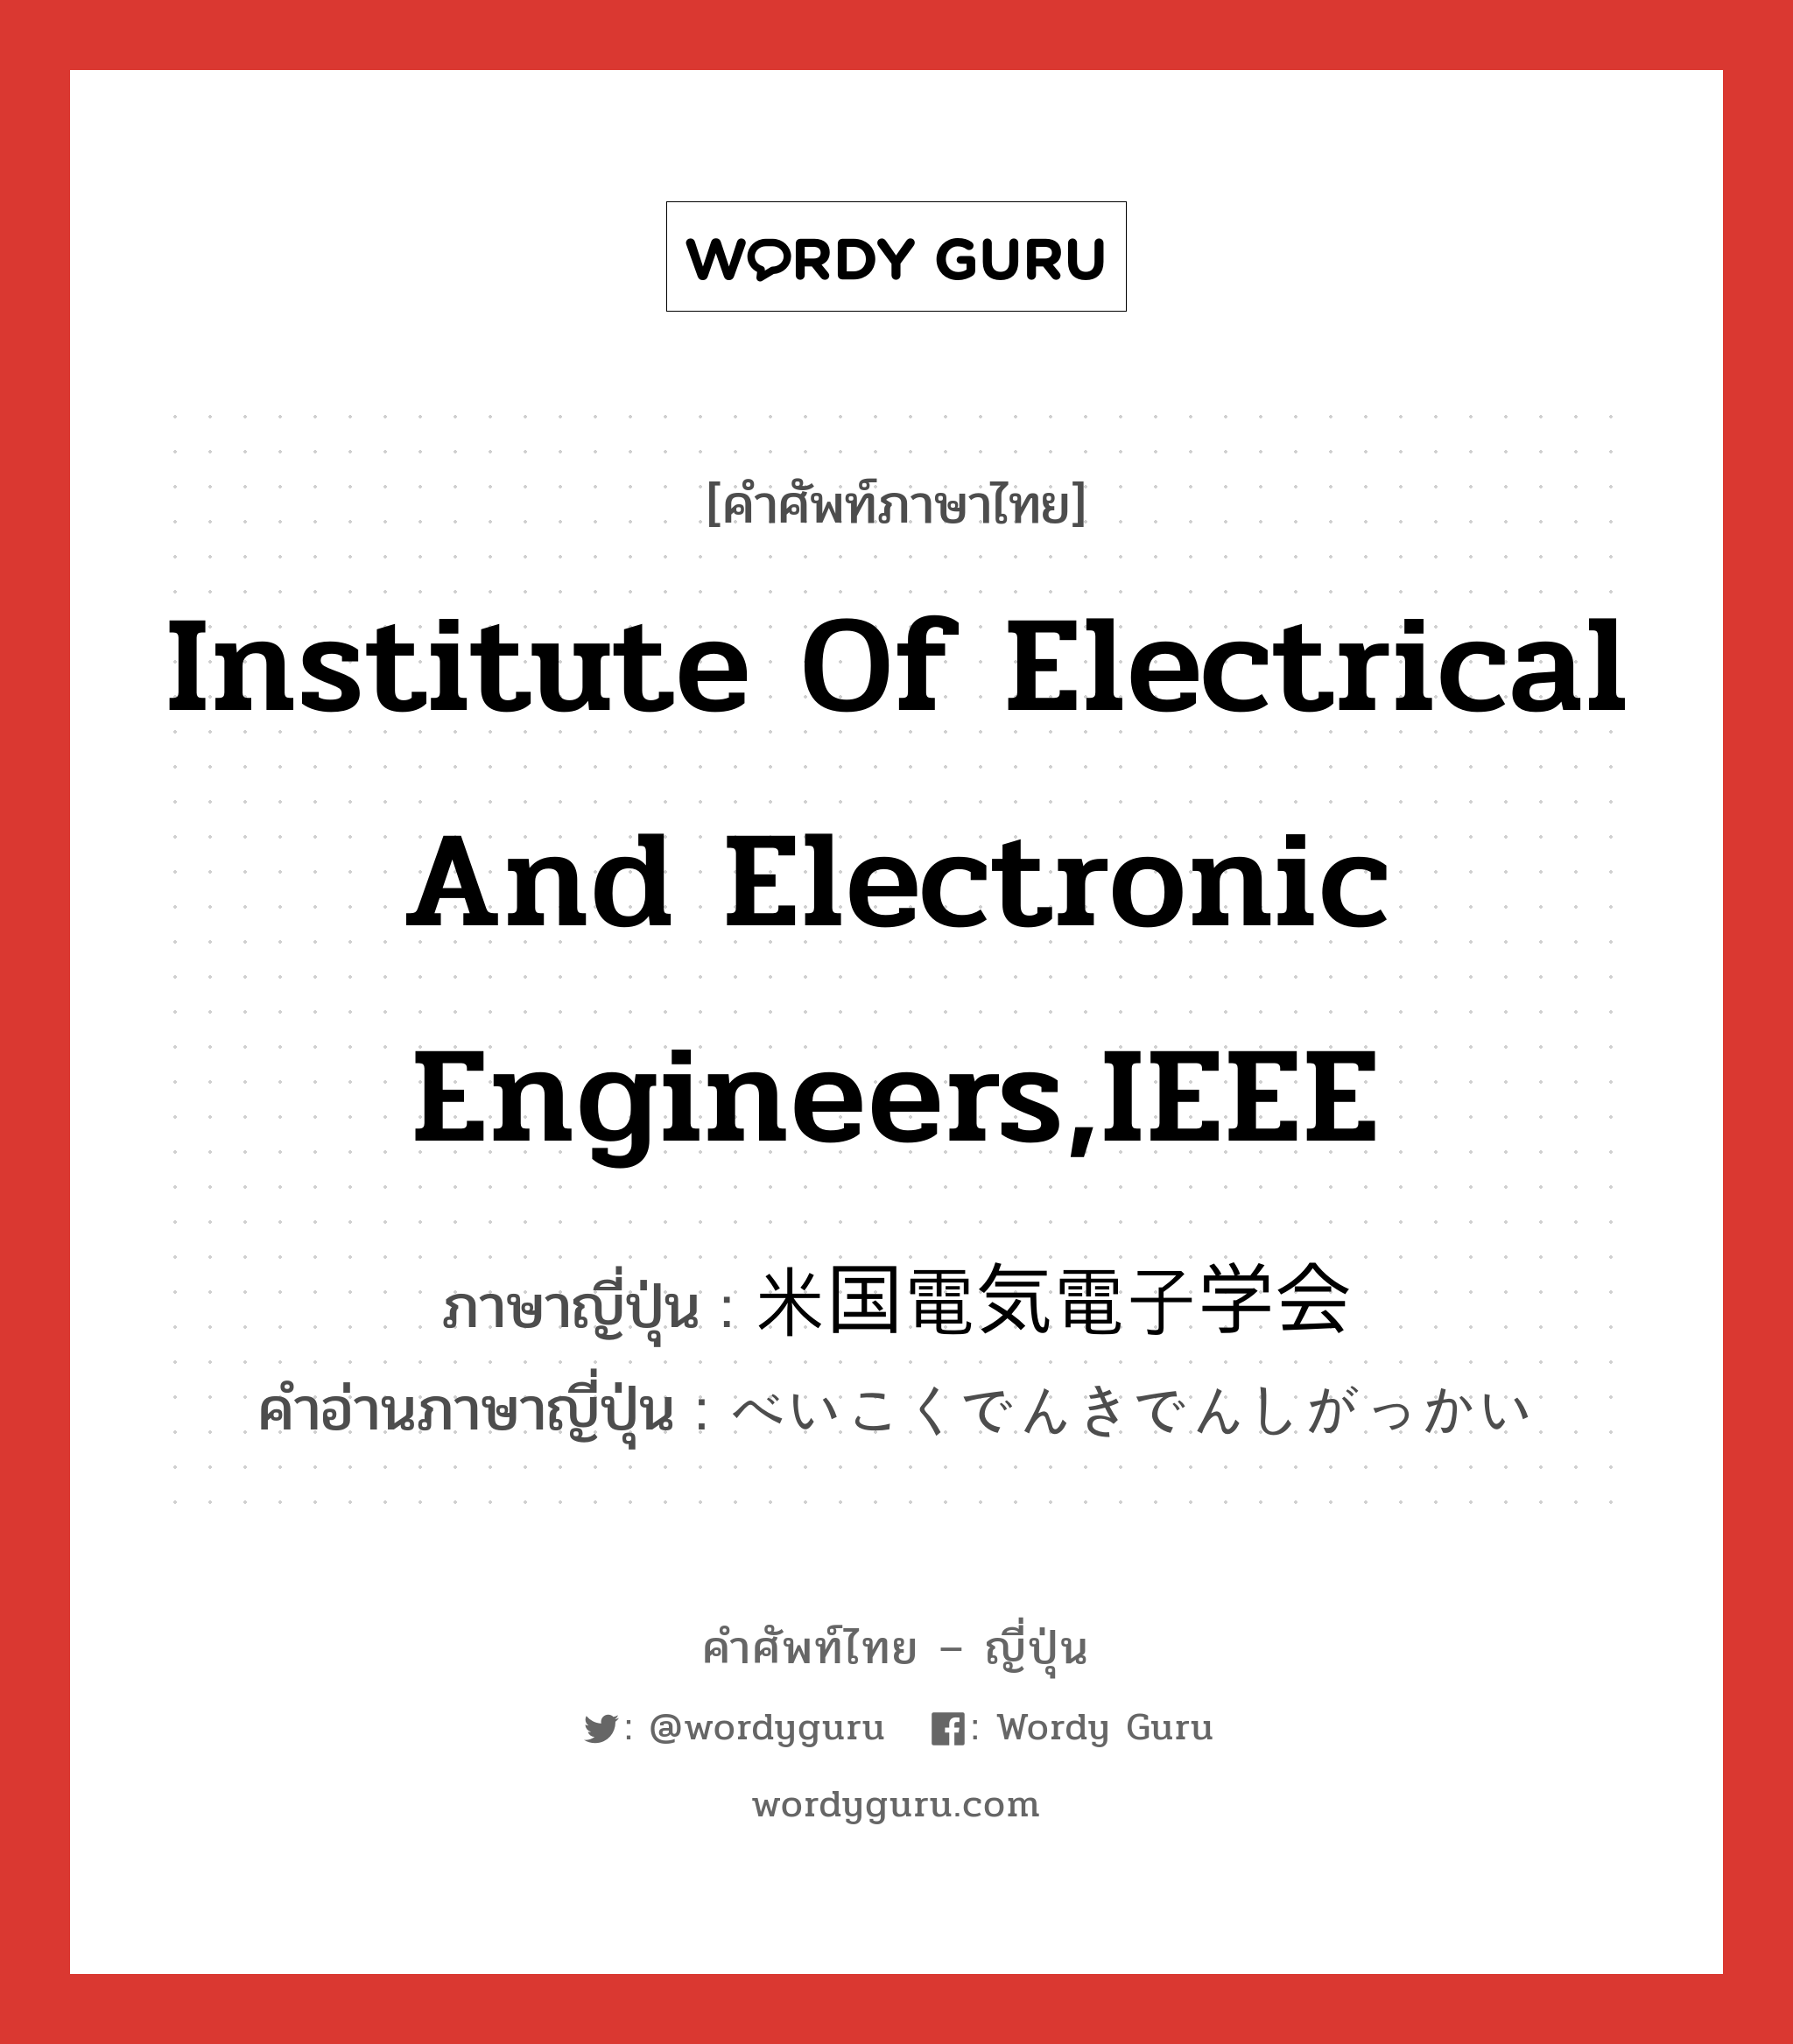 Institute of Electrical and Electronic Engineers,IEEE ภาษาญี่ปุ่นคืออะไร, คำศัพท์ภาษาไทย - ญี่ปุ่น Institute of Electrical and Electronic Engineers,IEEE ภาษาญี่ปุ่น 米国電気電子学会 คำอ่านภาษาญี่ปุ่น べいこくでんきでんしがっかい หมวด n หมวด n